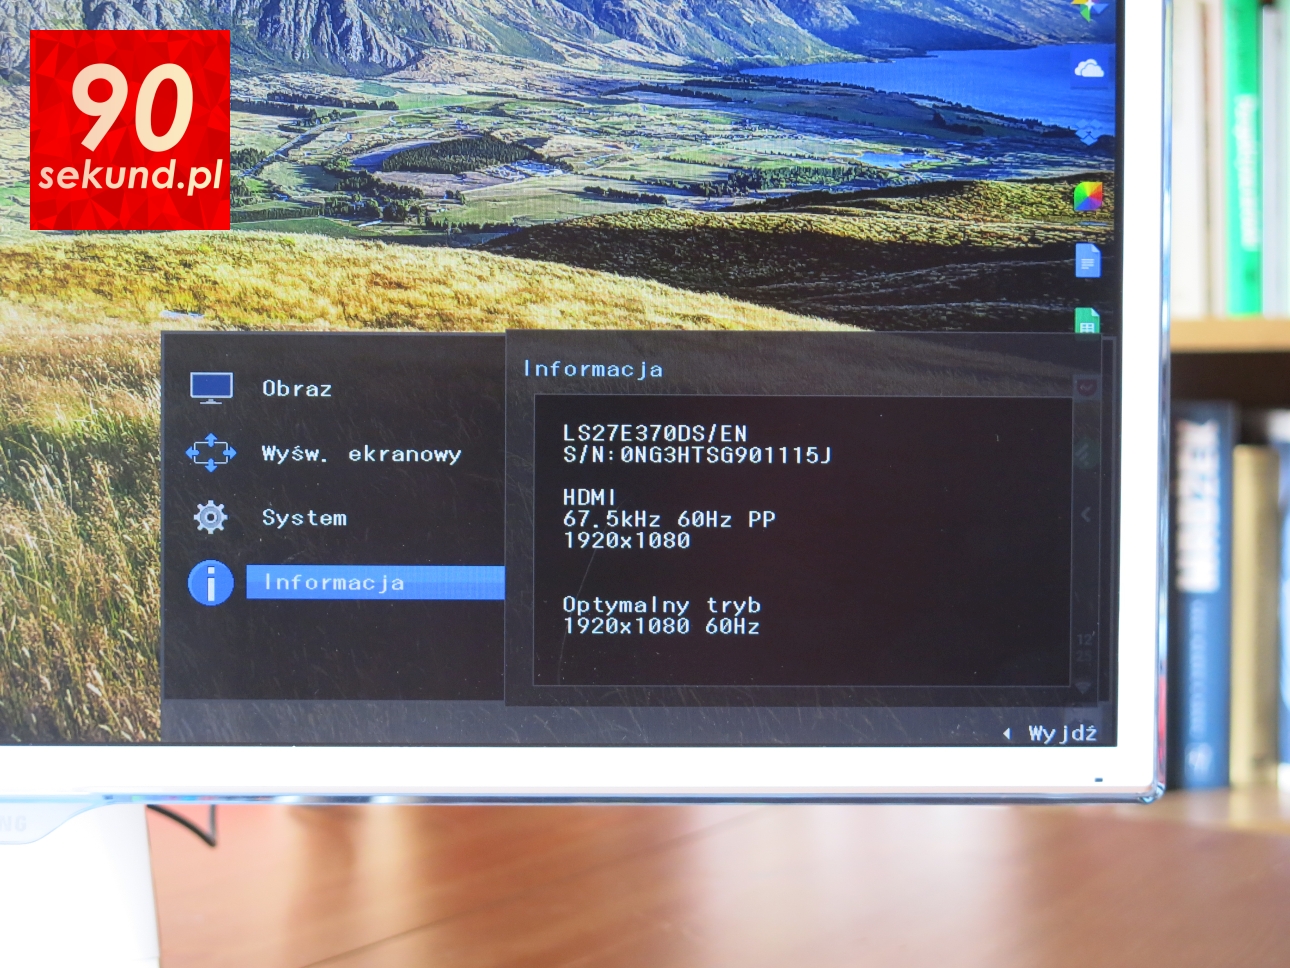 Recenzja Multimedialnego Monitora Samsung 27 cali SE370D - 90sekund.pl